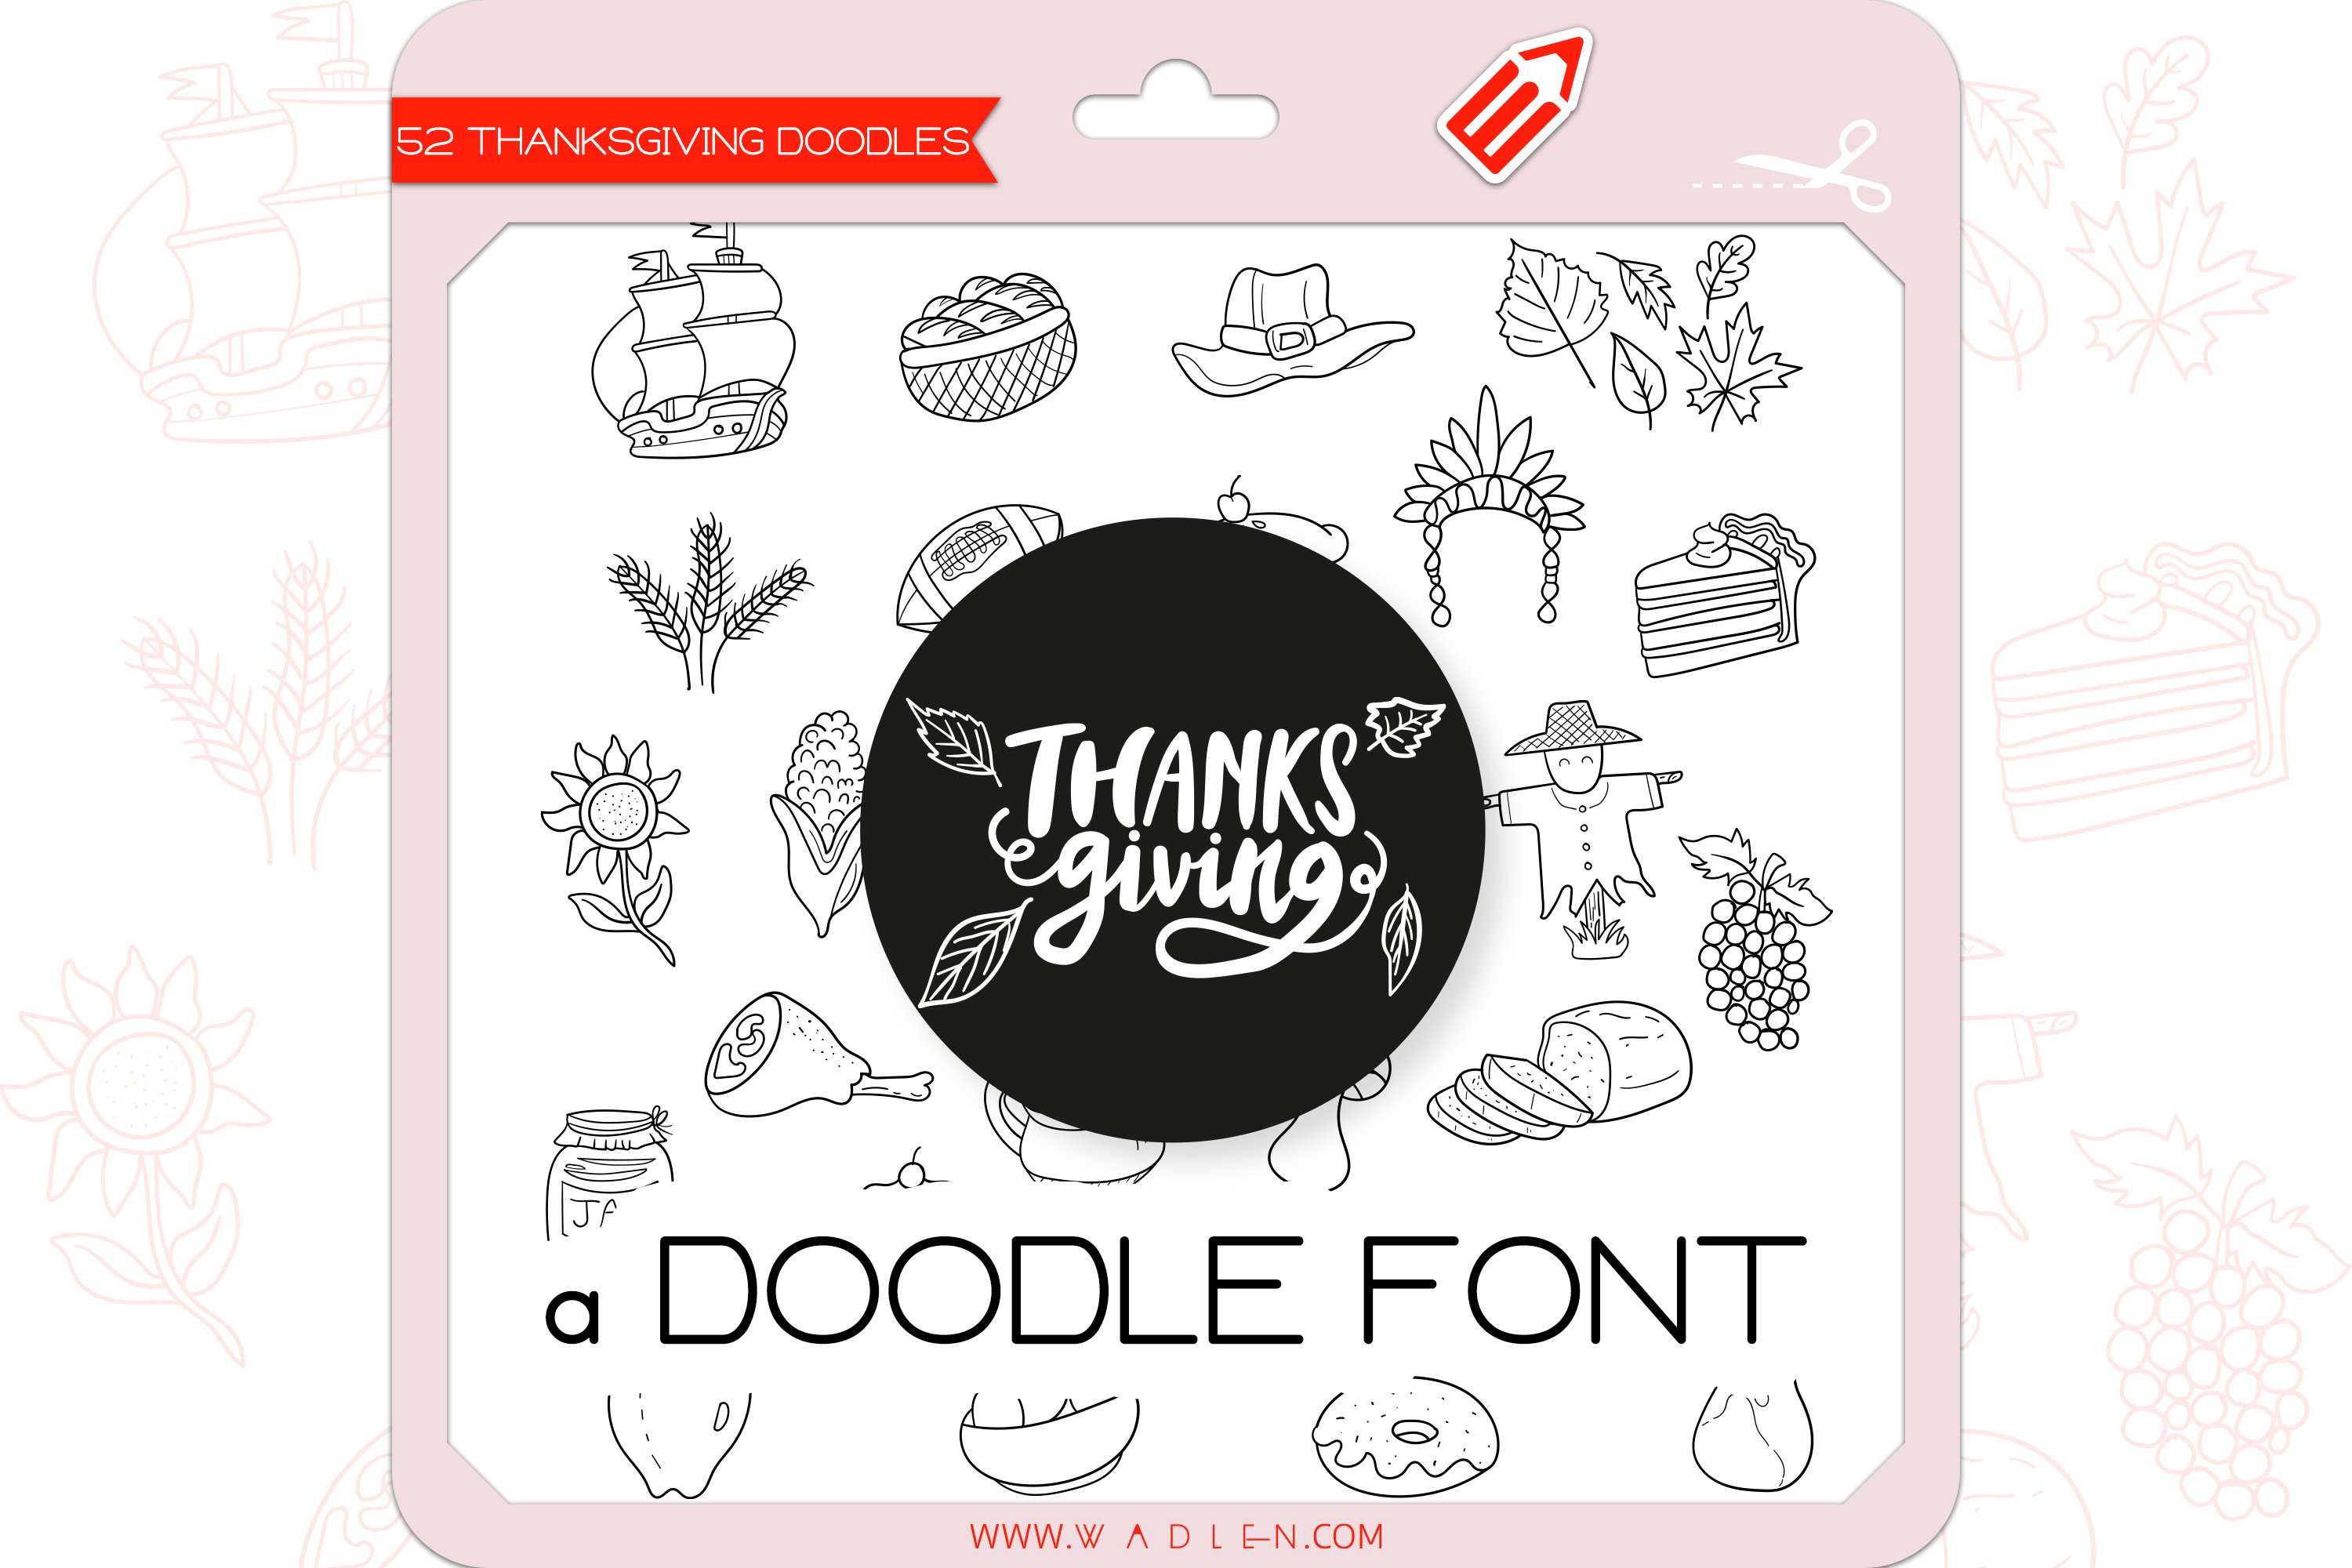 Thanksgiving Doodles - Dingbats Font cover image.